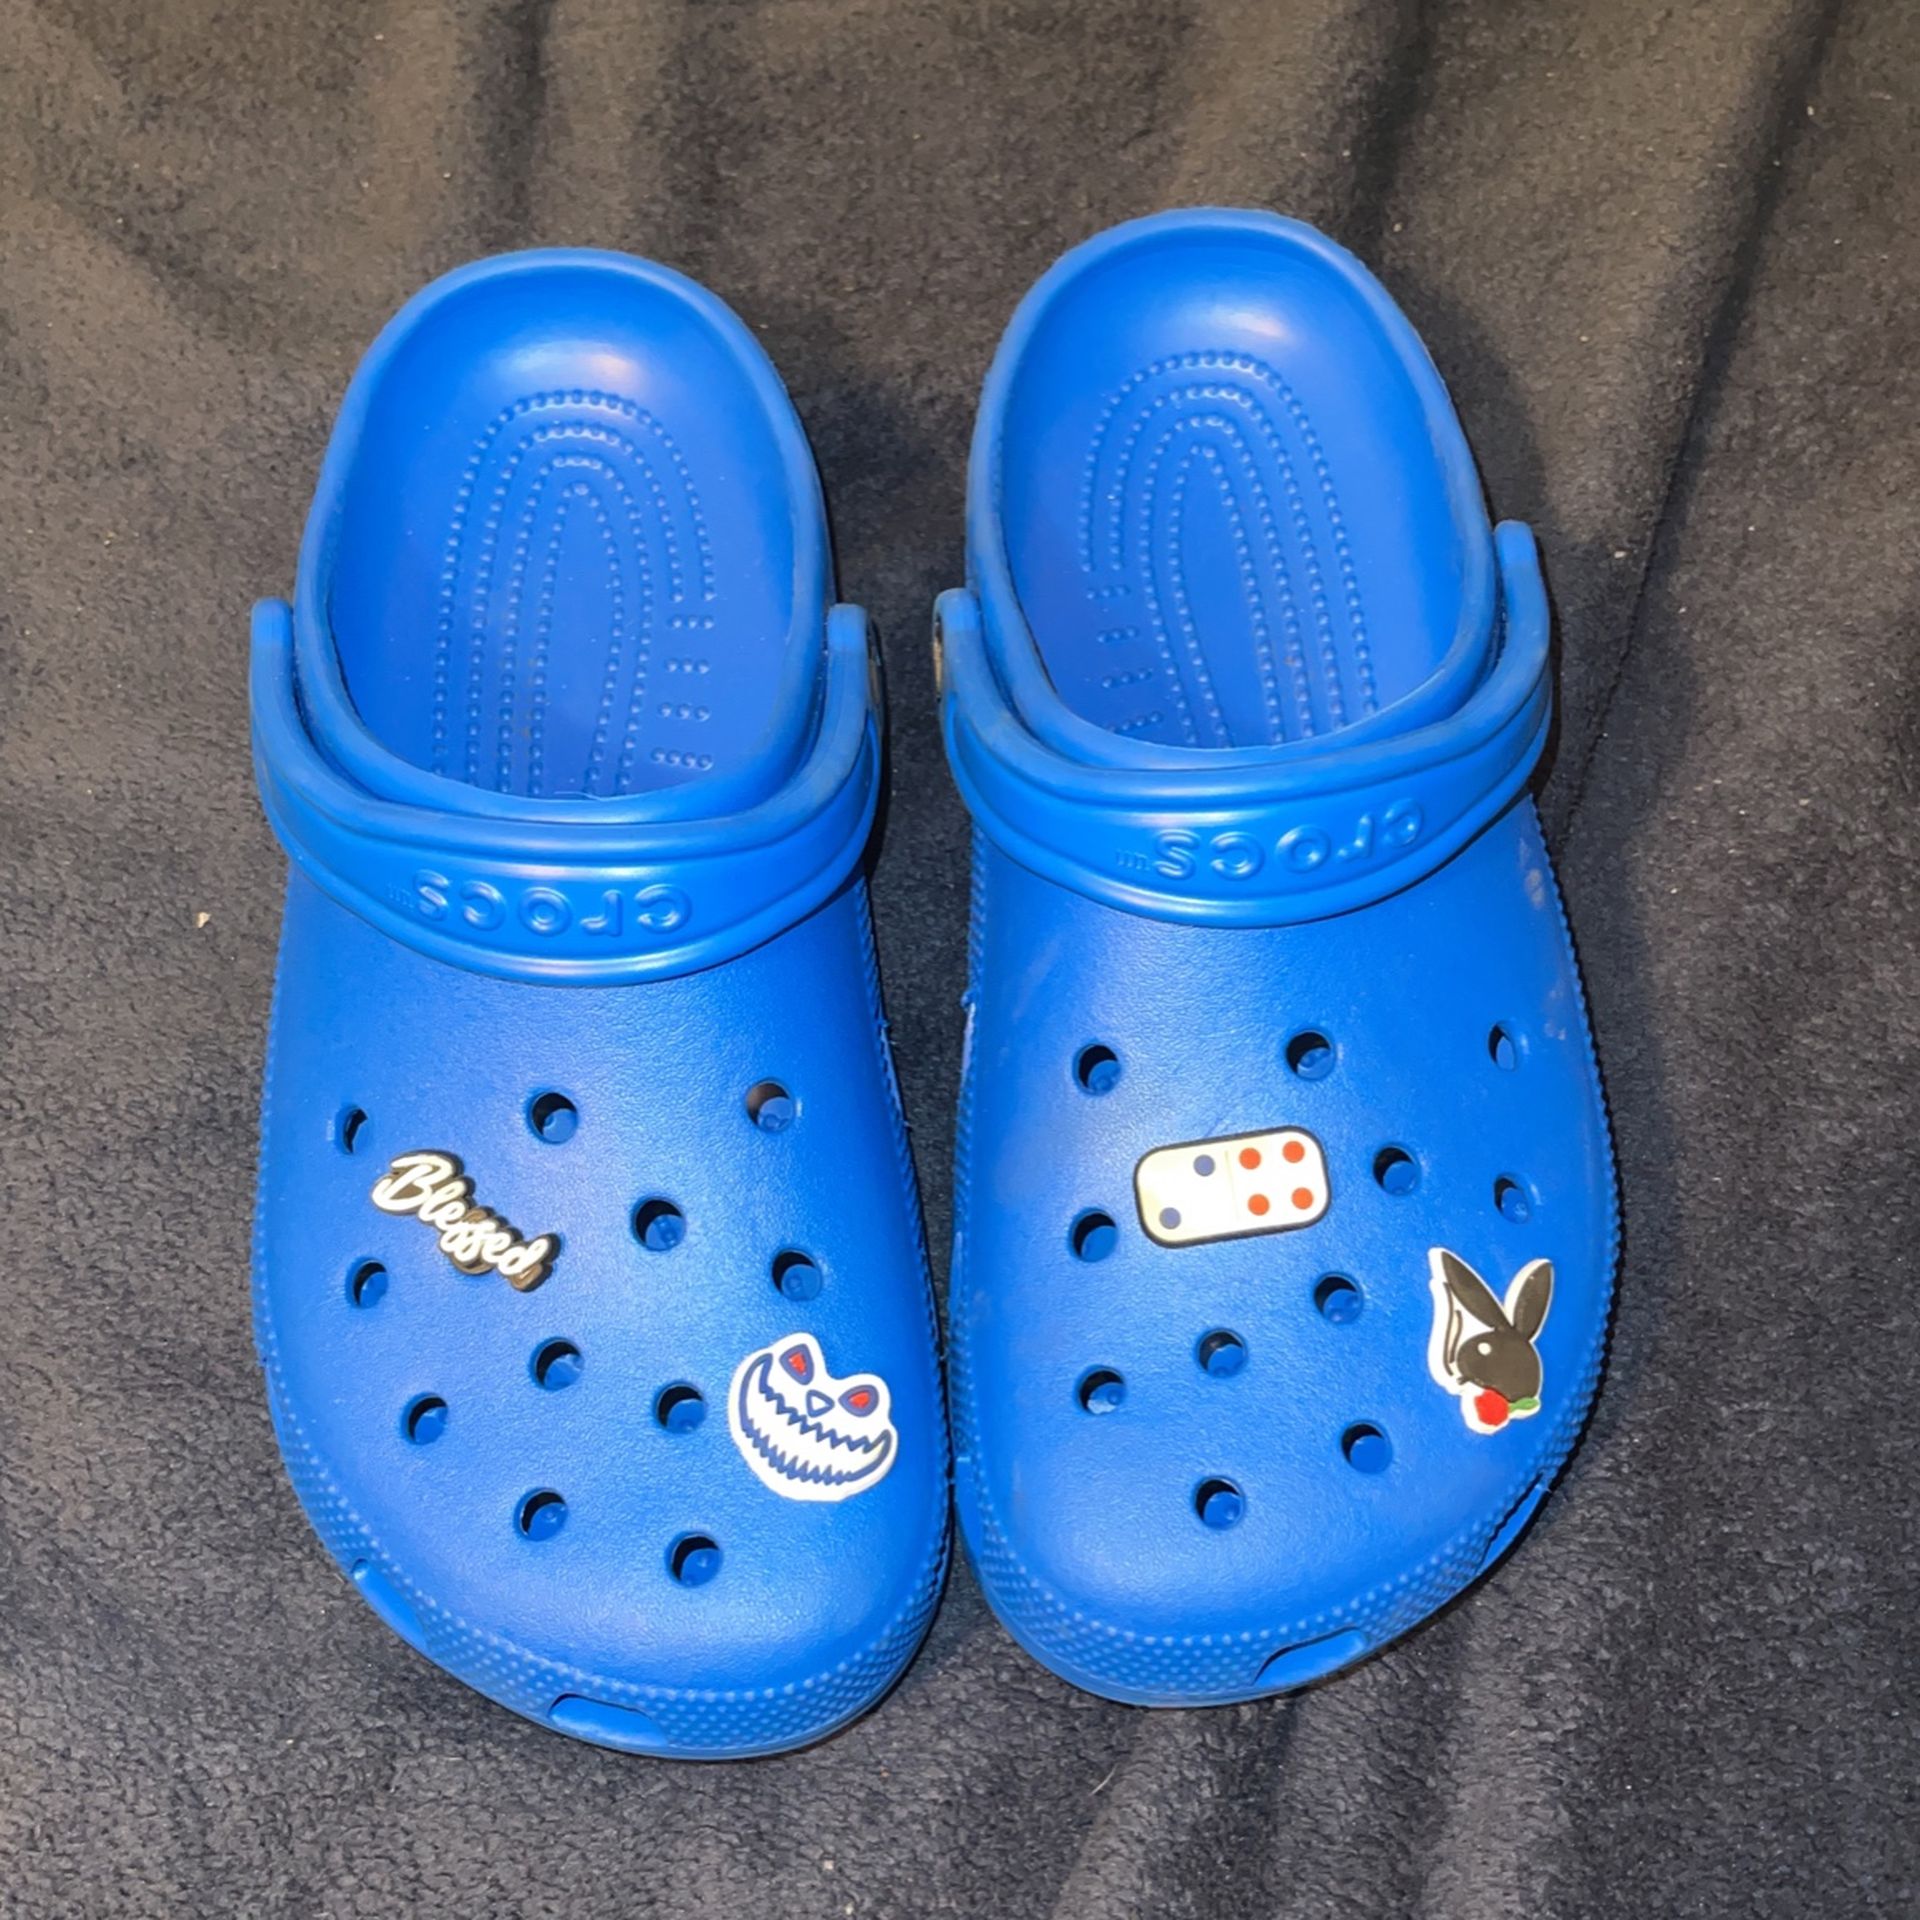 New Blue Crocs